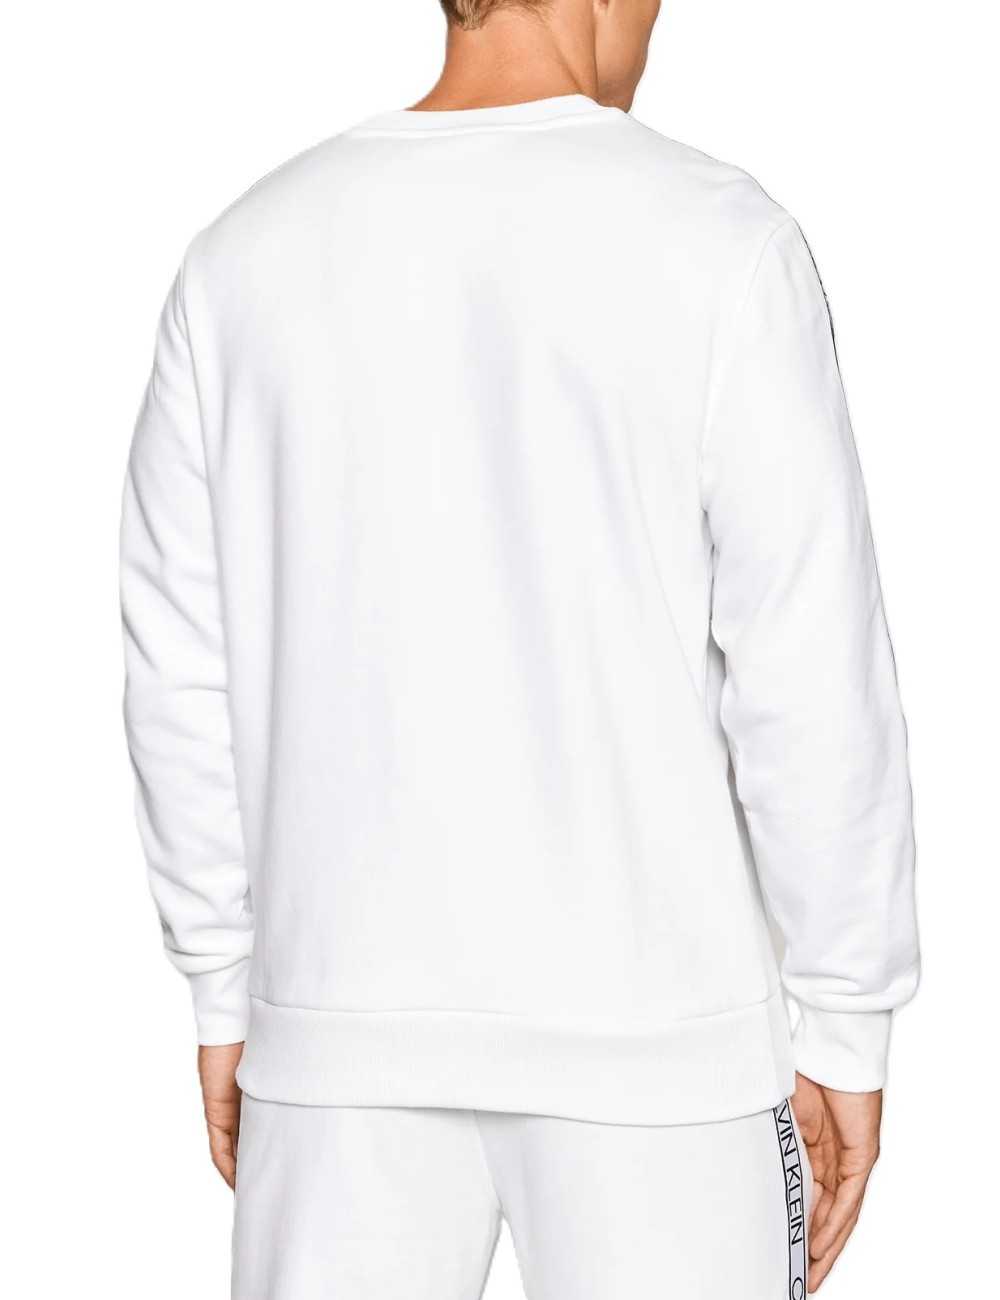 Calvin Klein felpa uomo Essential logo bianco girocollo - Felpe Uomo